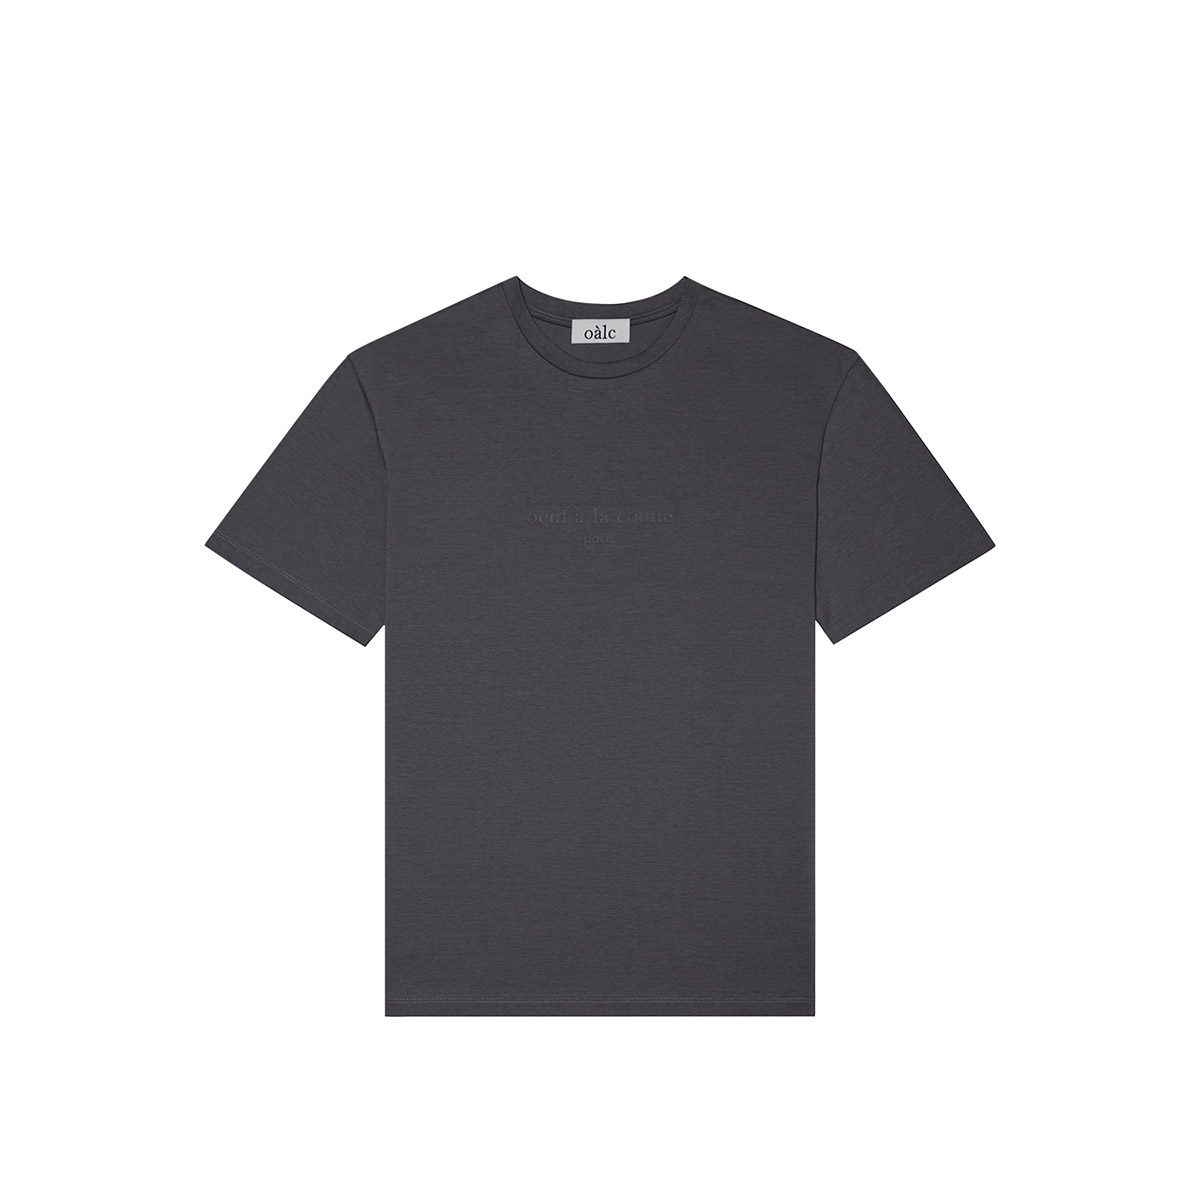 oalc SOFT COTTON T-SHIRT 소프트 코튼 티셔츠 (DARK GRAY)